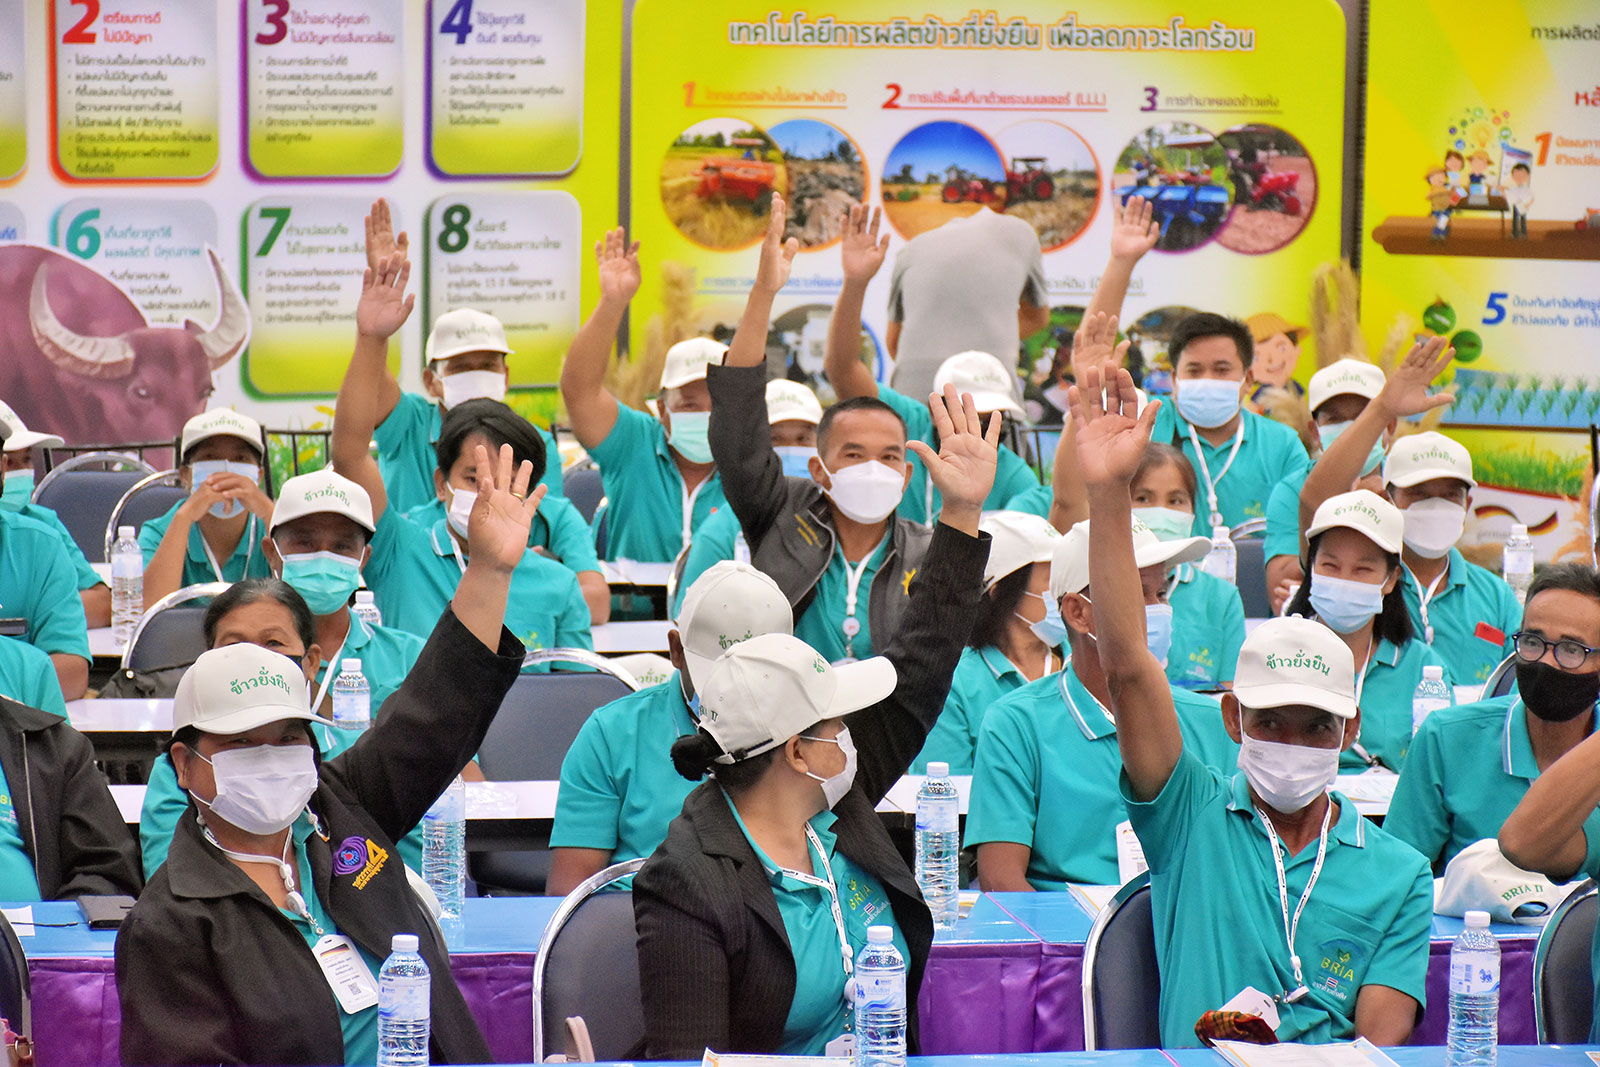 MSVC Thailand members from Ubon Ratchathani joined in the MSVC Closing Event held at Sirindhorn Hydro Power Plant Auditorium. (กลุ่มเกษตรกรรายย่อยโครงการ MSVC จากจังหวัดอุบลราชธานีเข้าร่วมพิธีปิดโครงการอย่างคับคั่งที่หอประชุมเขื่อนไฟฟ้าพลังน้ำสิรินธร)